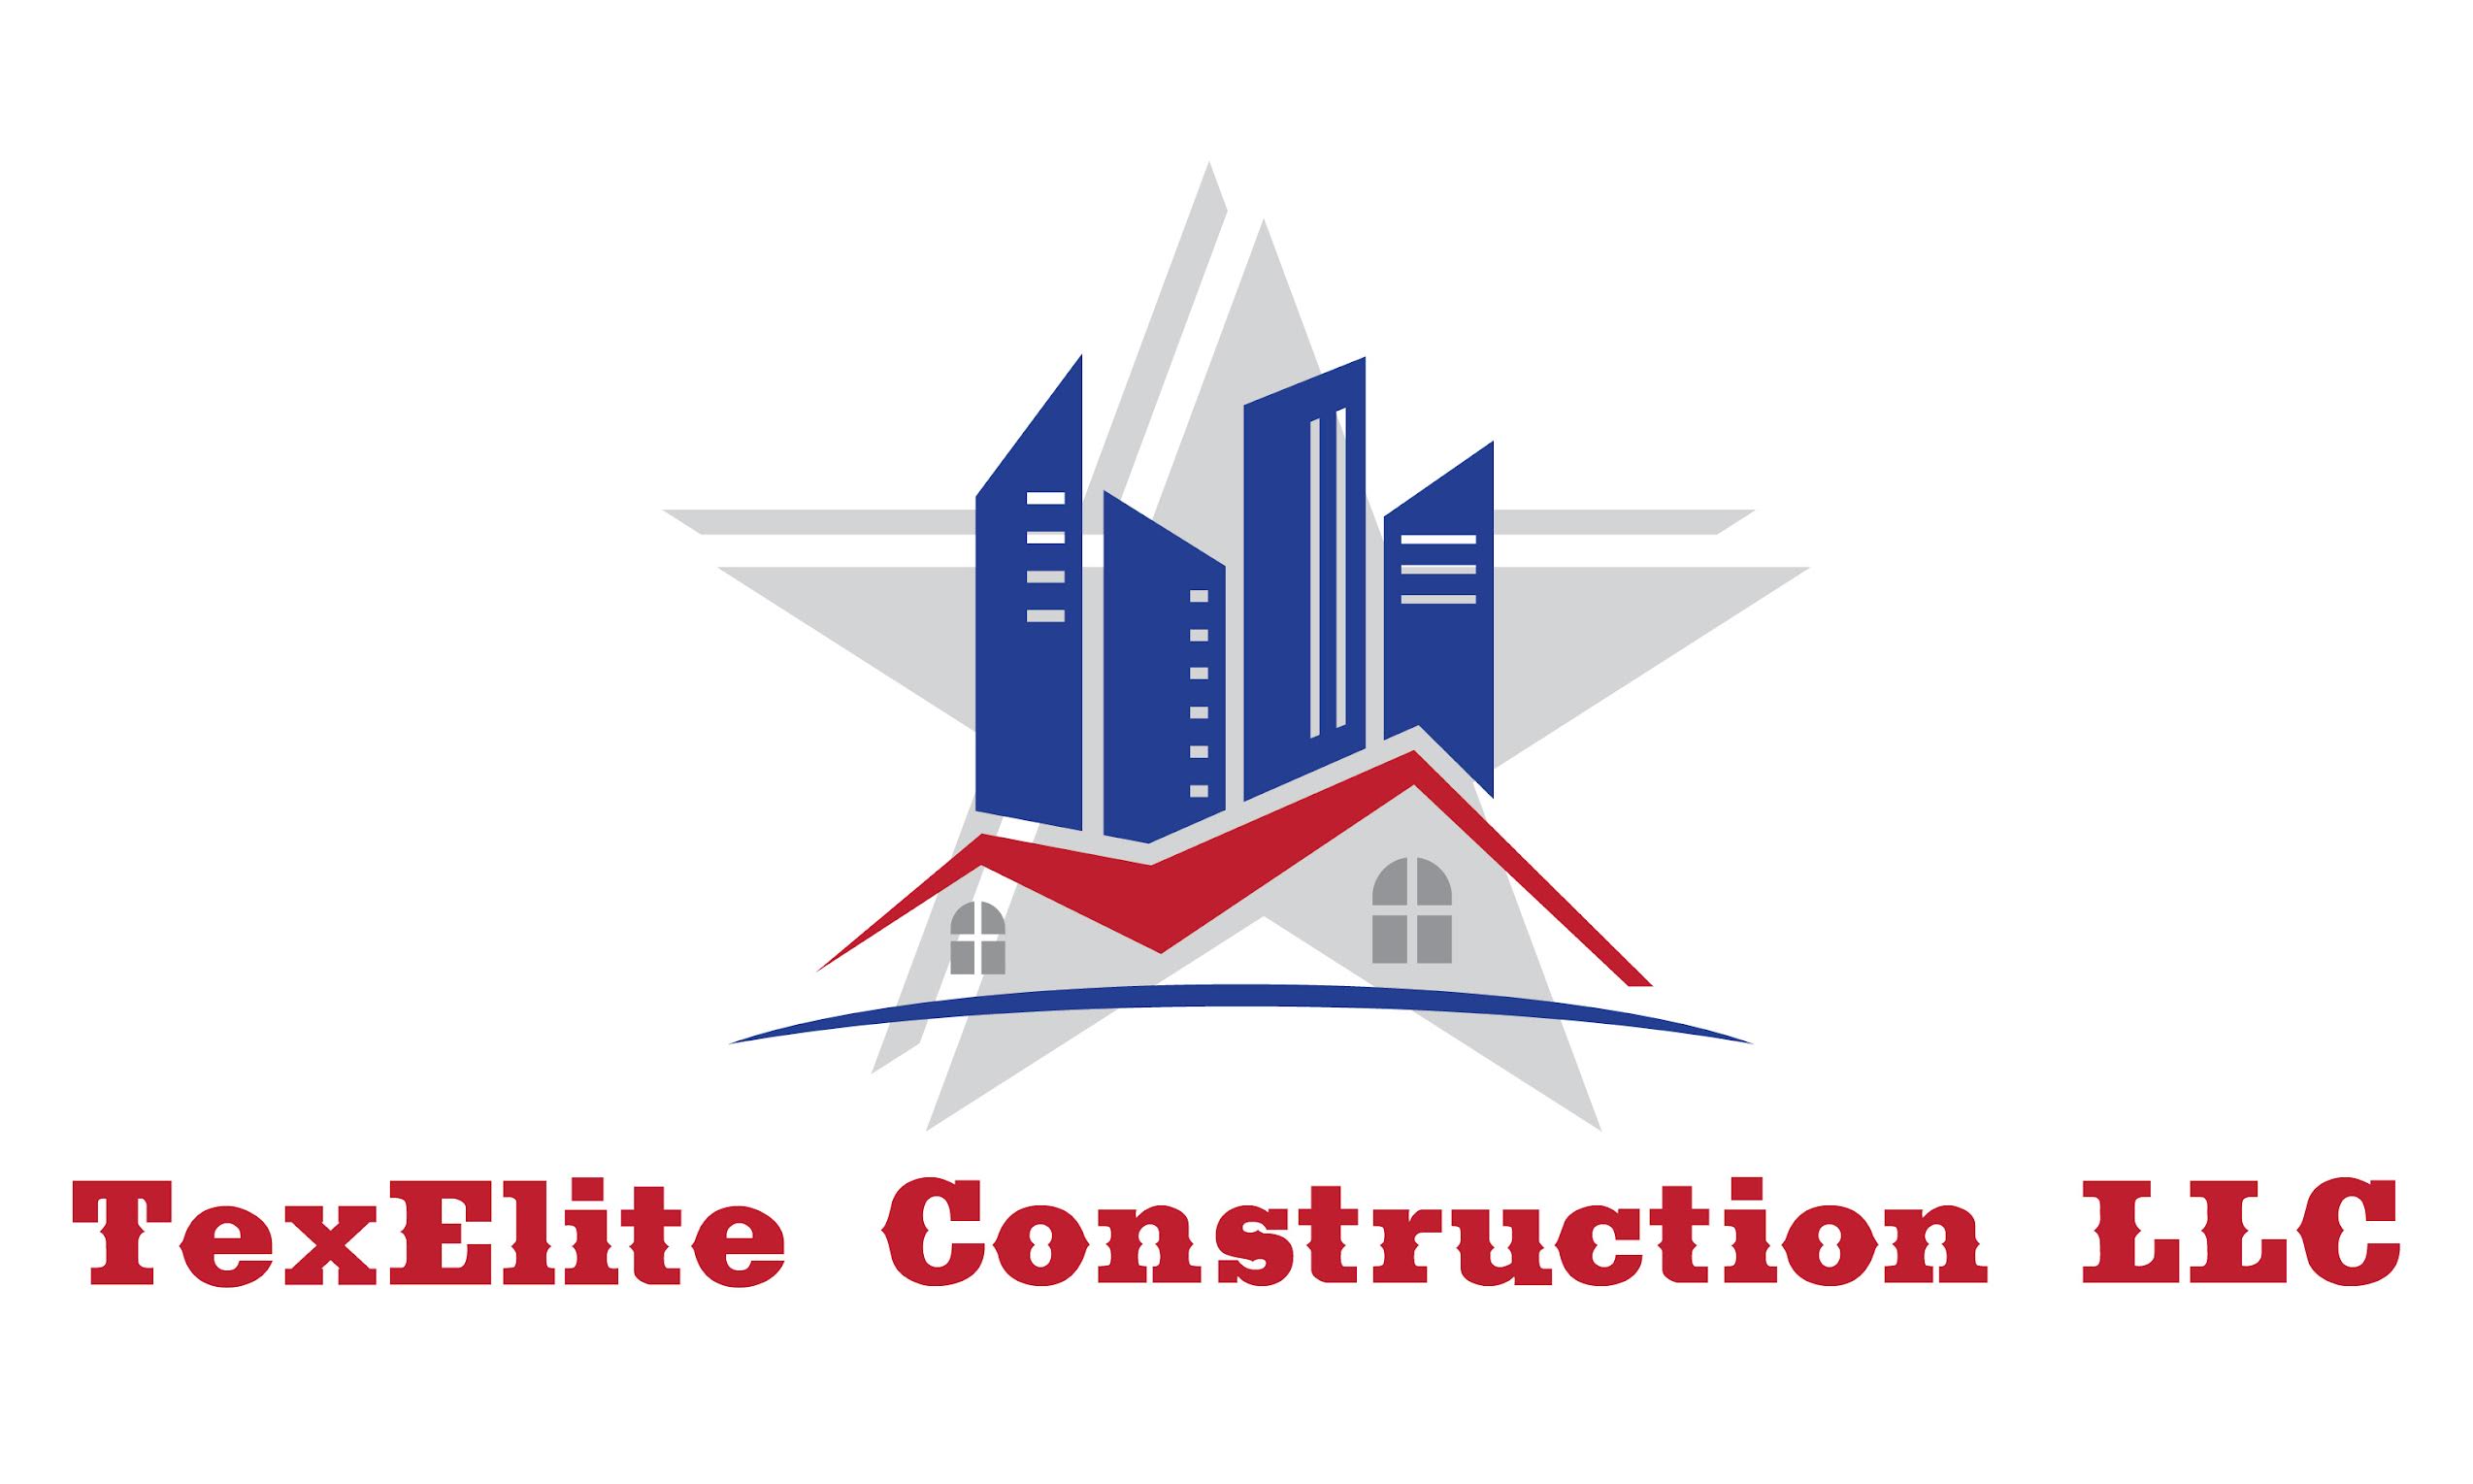 TexElite Construction LLC logo